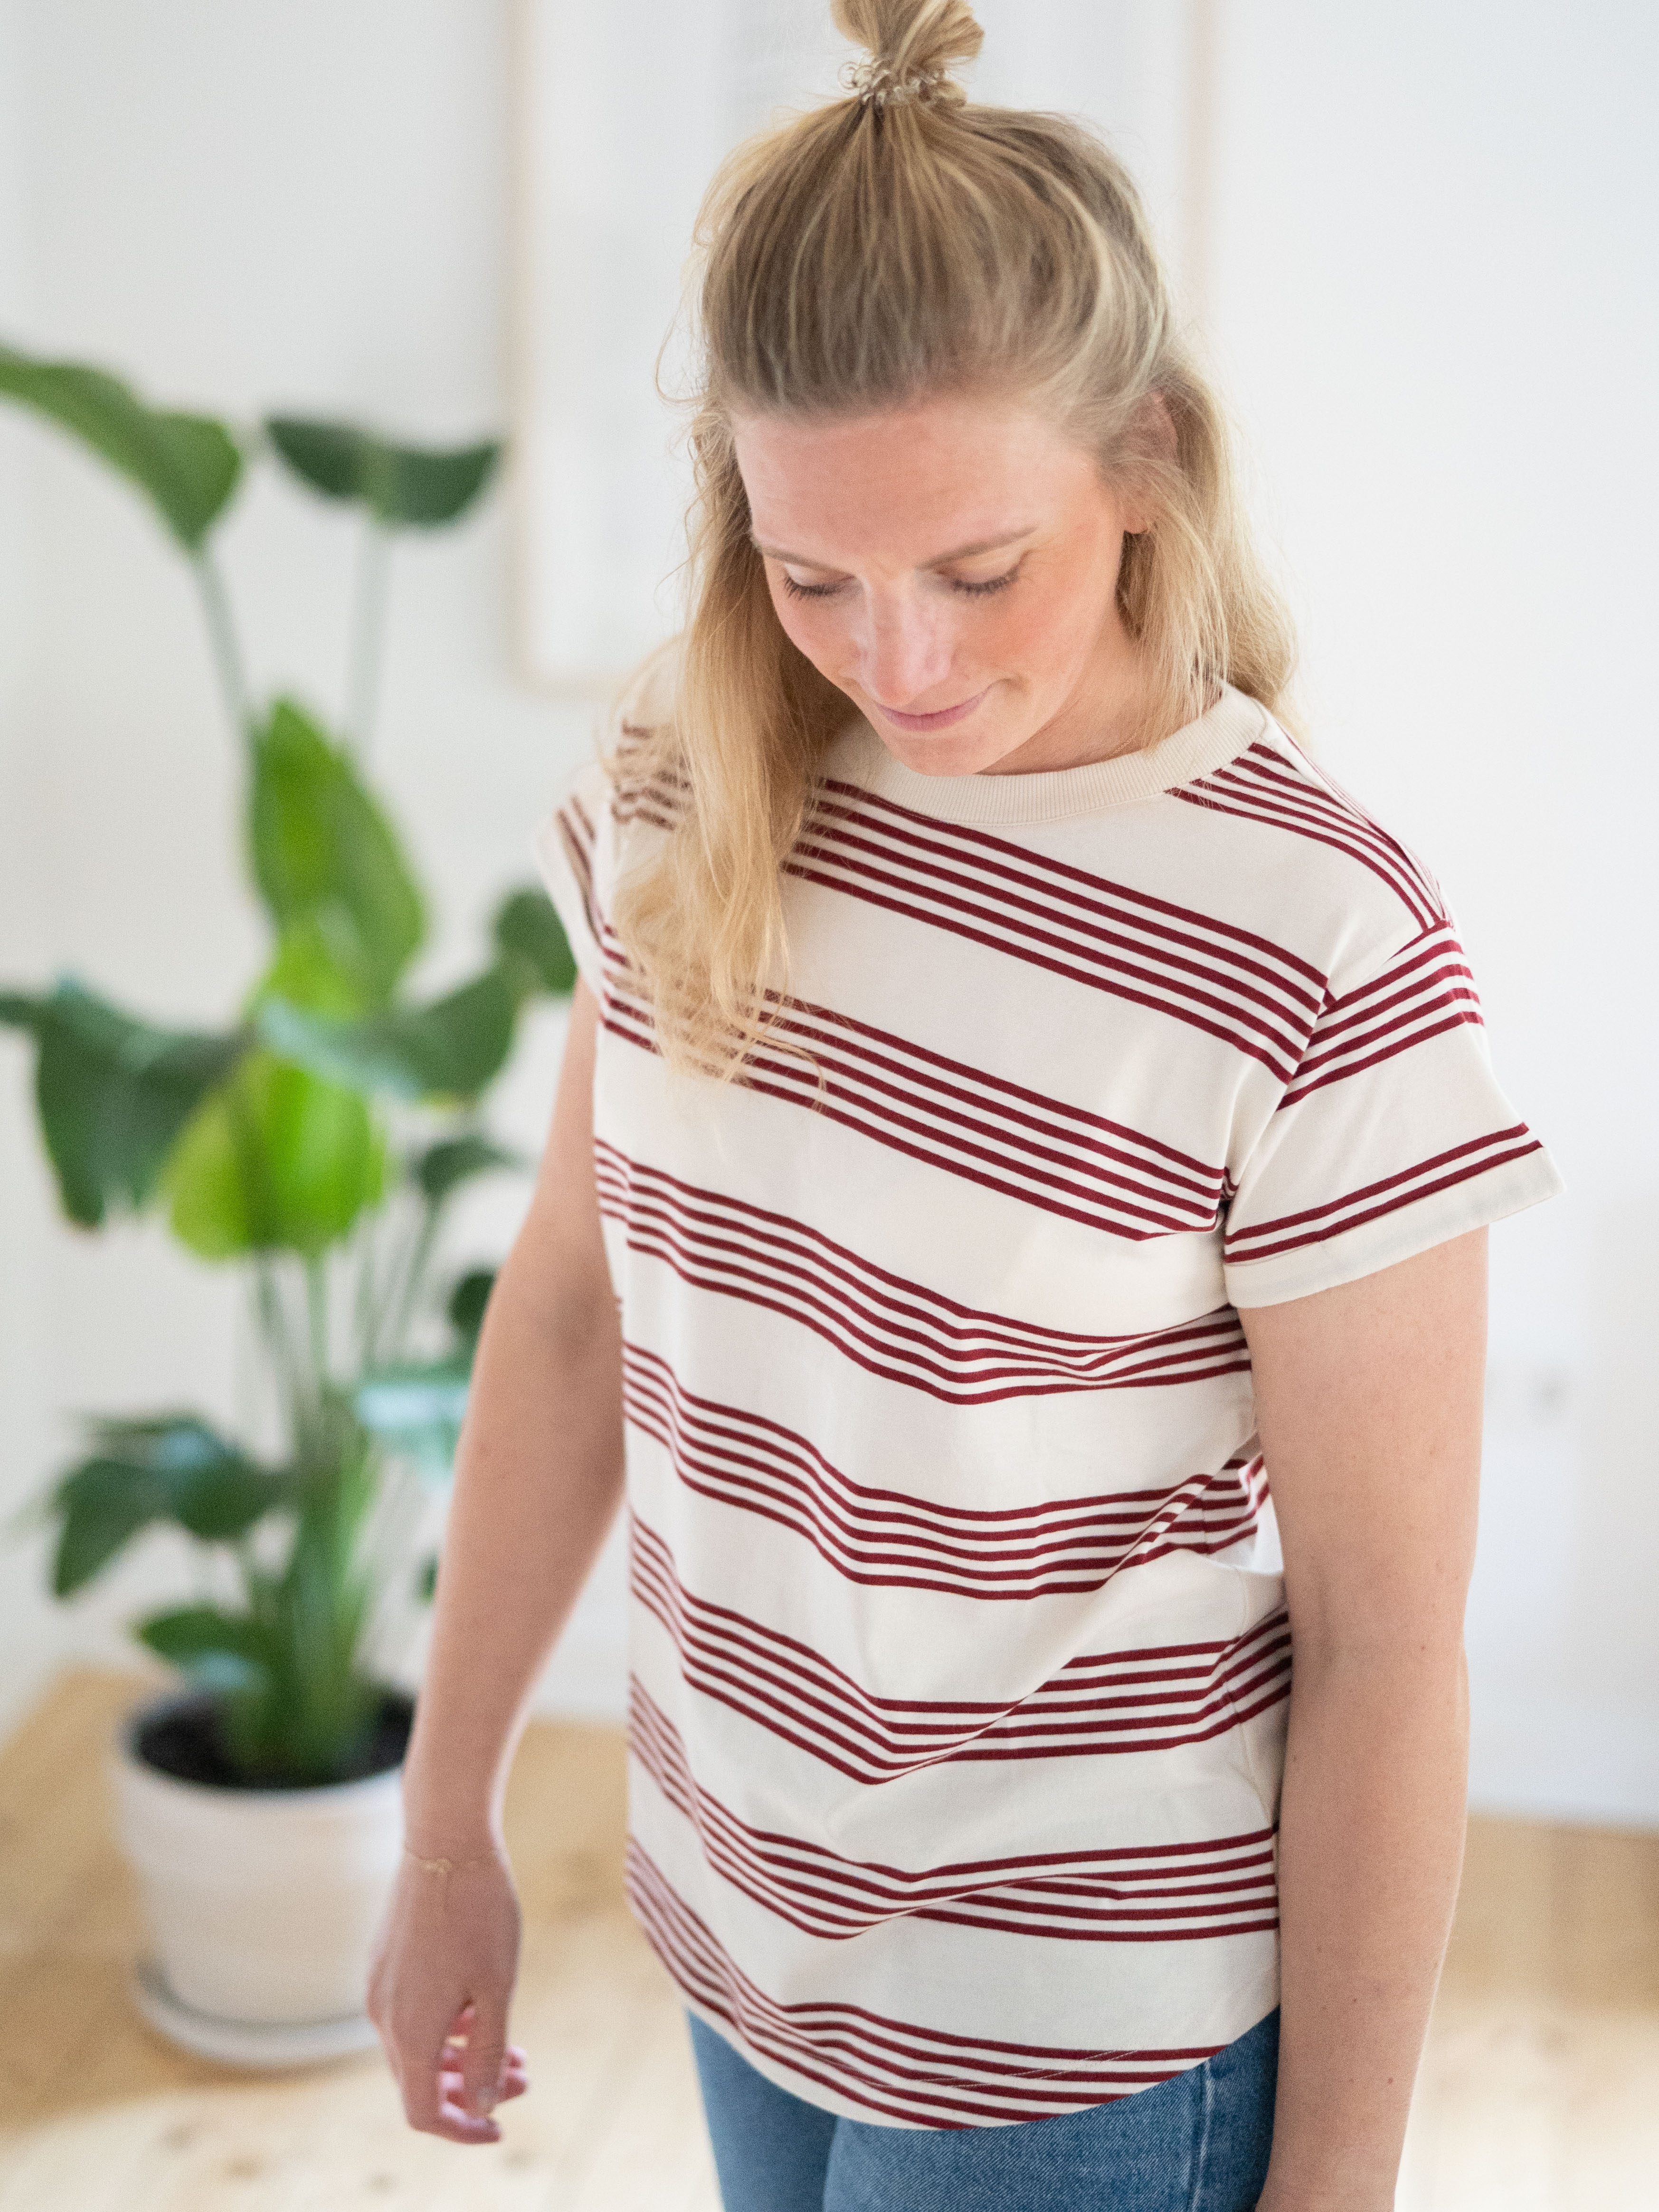 FUXBAU Fair Fashion Frauen Friendly Fabrics Streifenshirt in creme bordeaux gestreift.